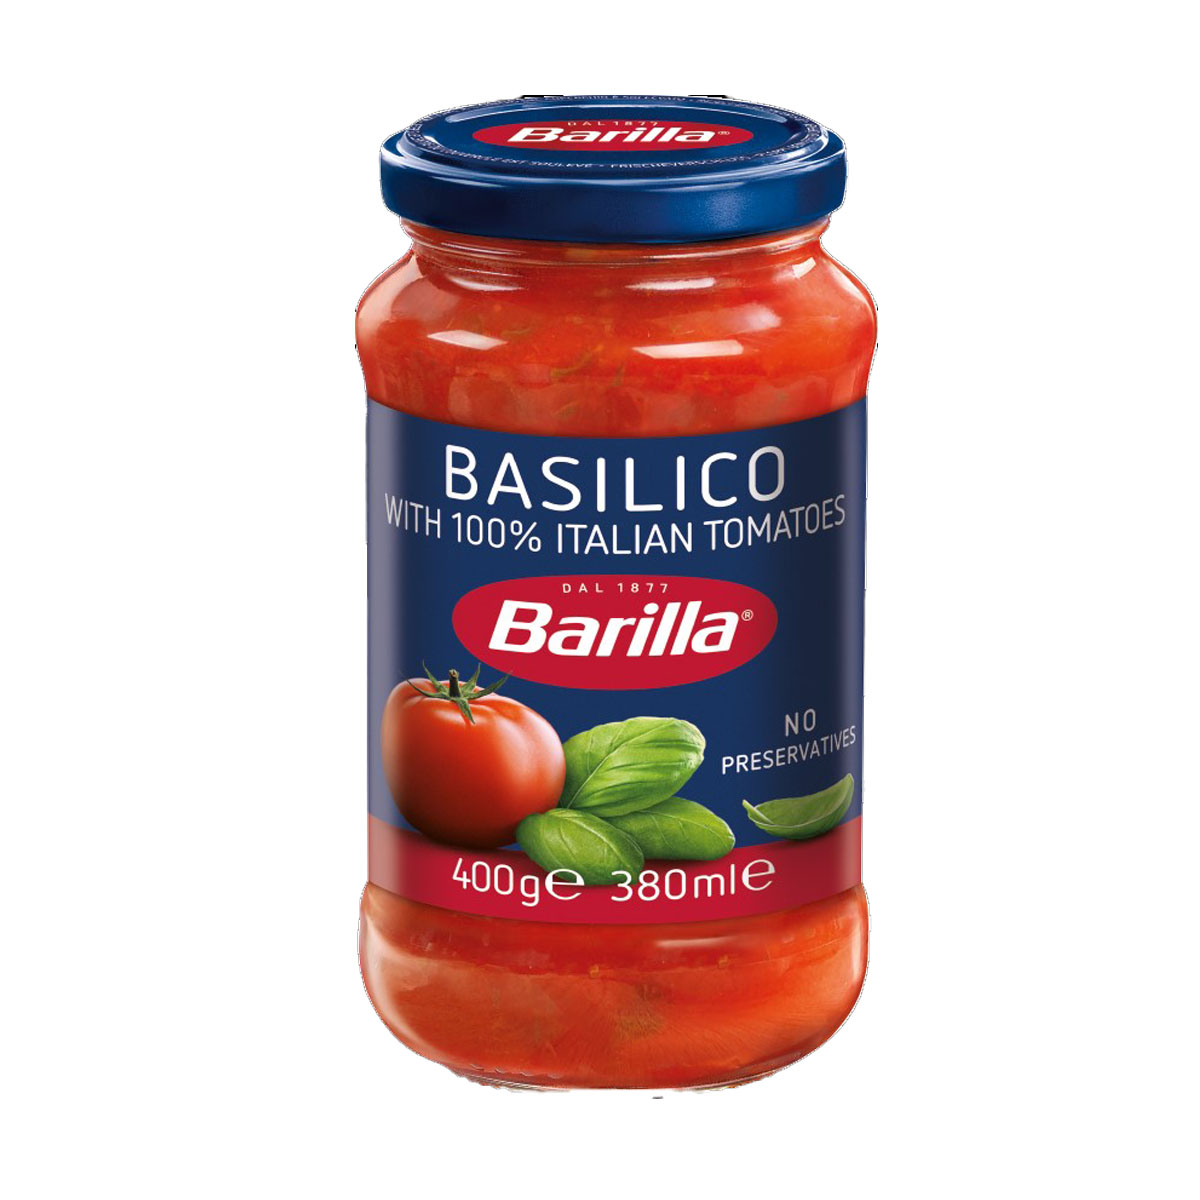 Barilla Basilico Pasta Sauce Malaysia 400g